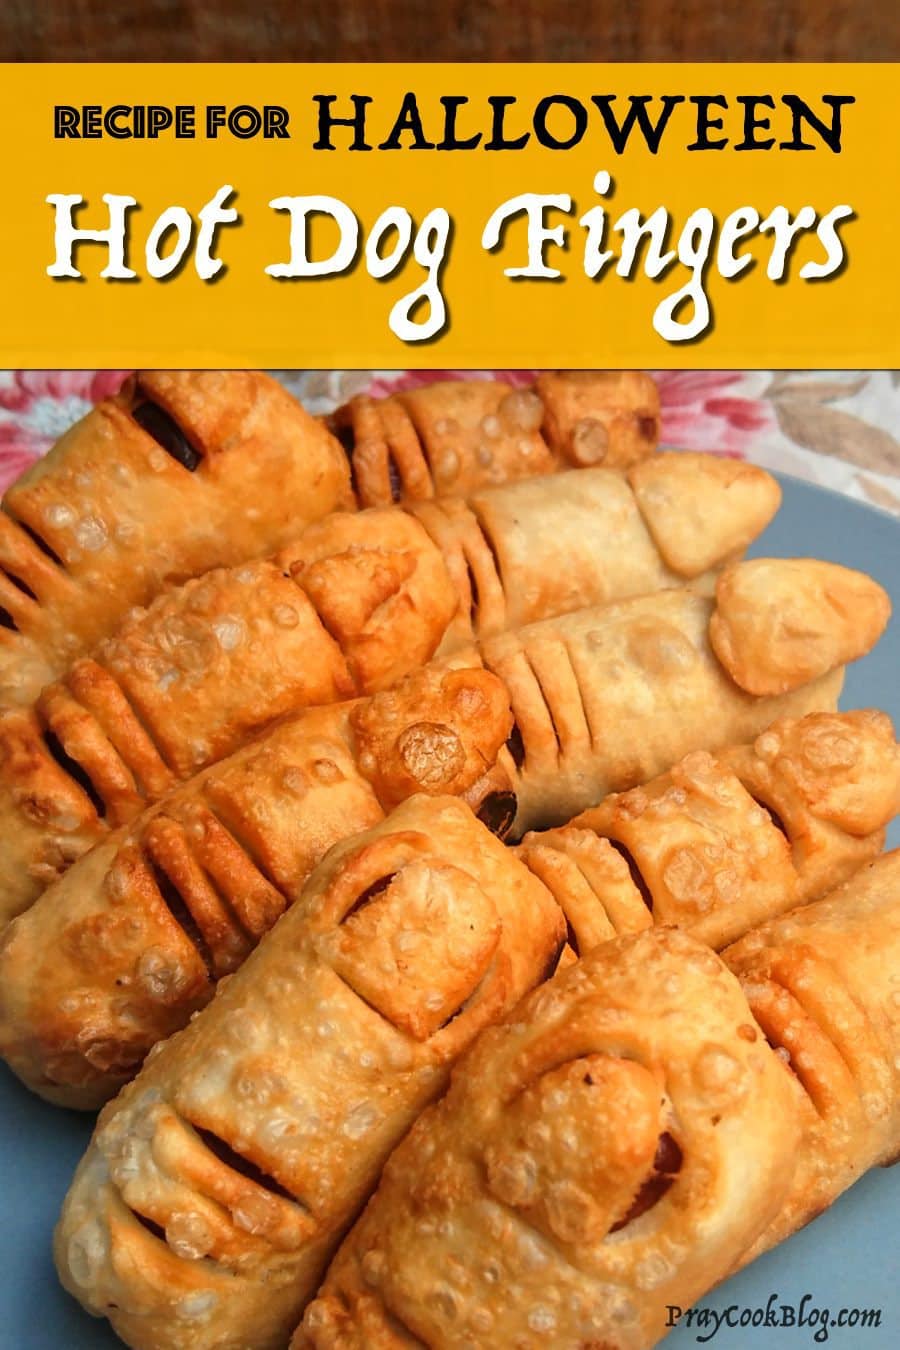 hot dog fingers for halloween